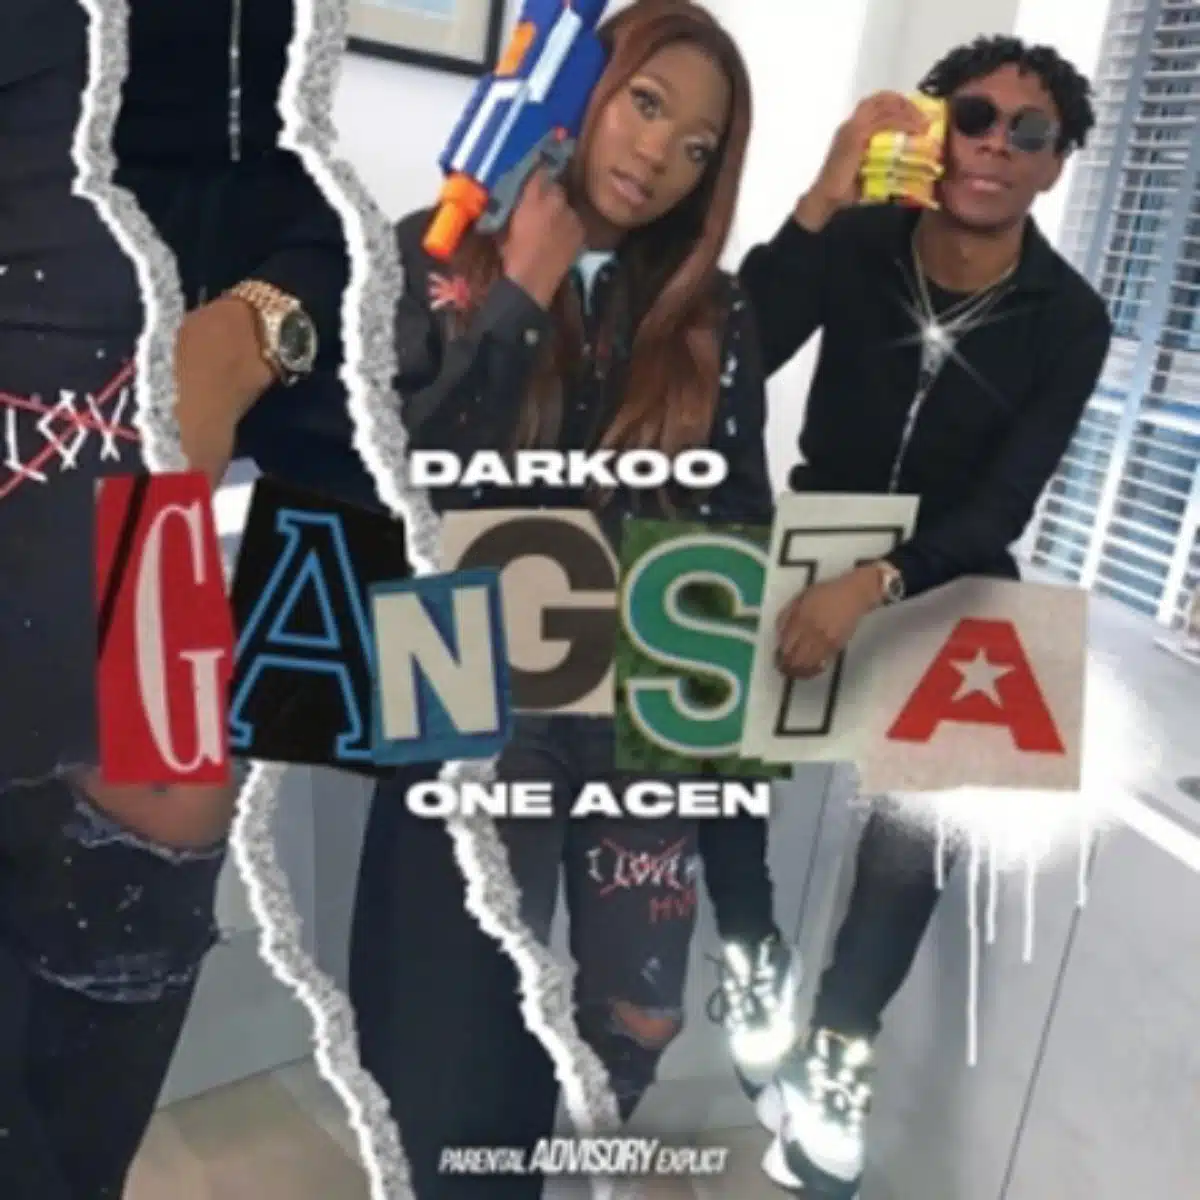 DOWNLOAD: Darkoo Ft. One Acen – “Gangsta” (Gangstaway) Mp3